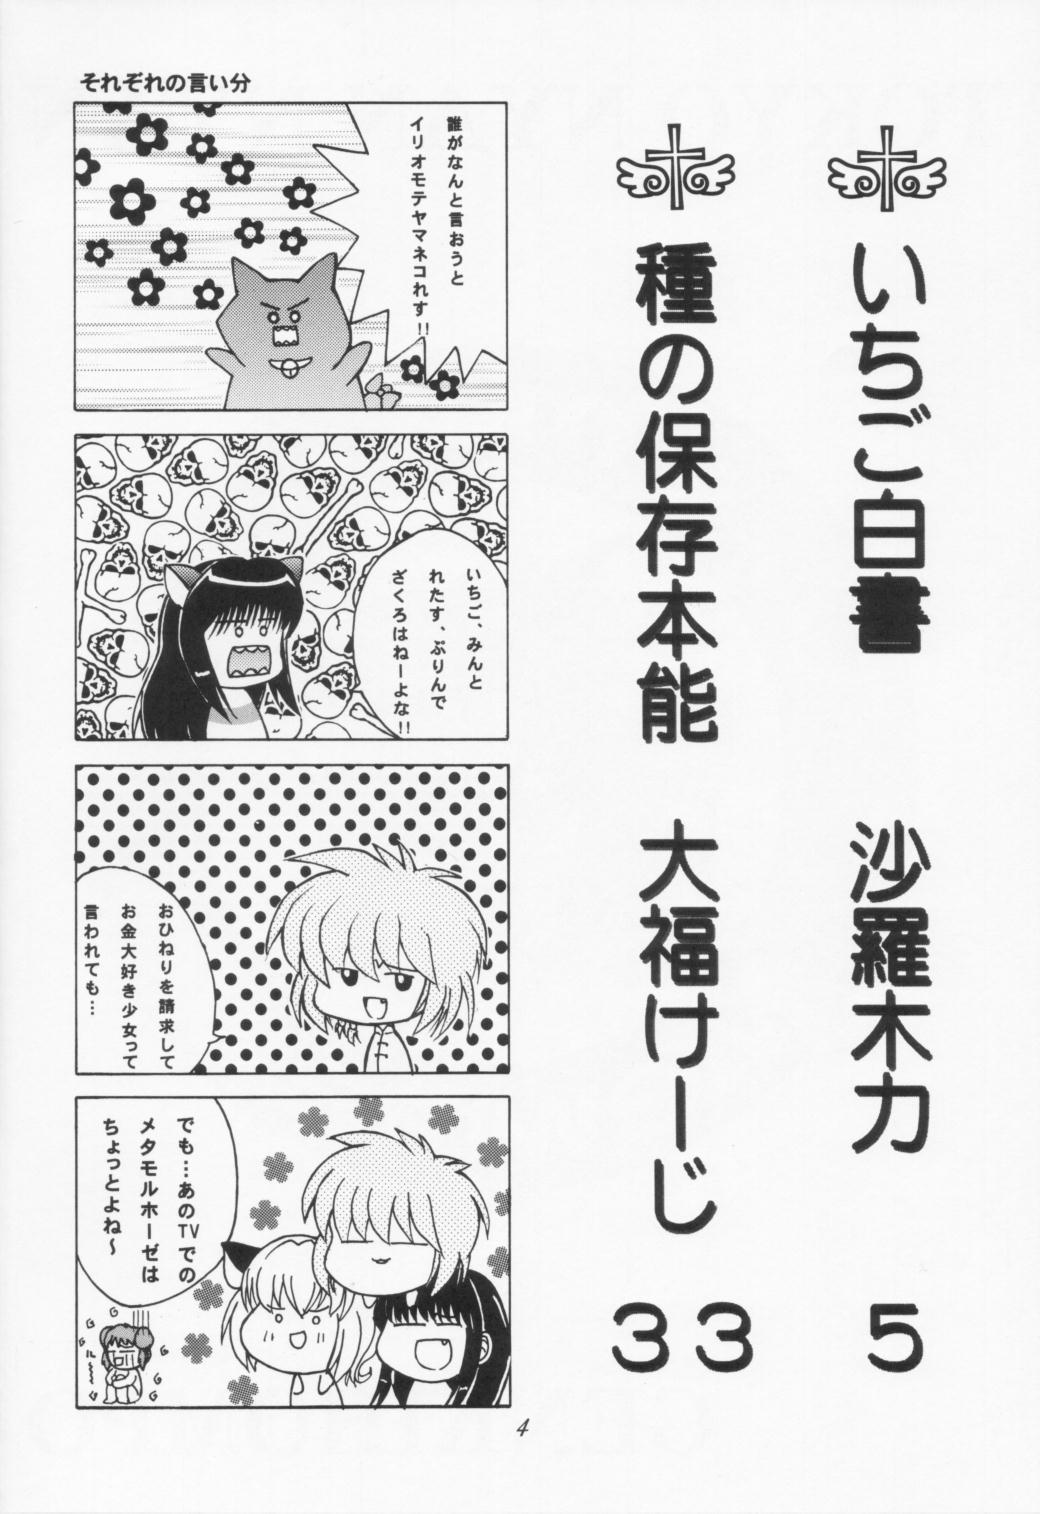 Novia Tokyo Nekomusume - Tokyo mew mew Anale - Page 3